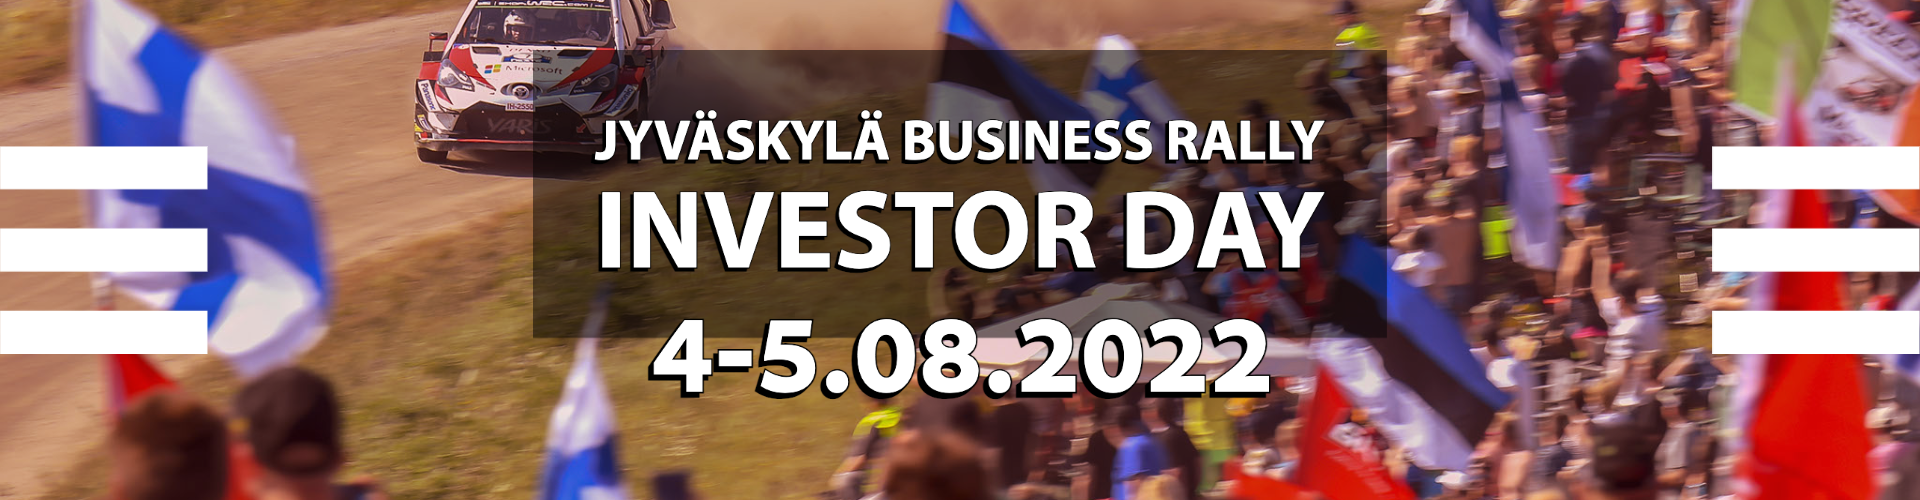 Jyväskylä Business Rally Investor Day 2022